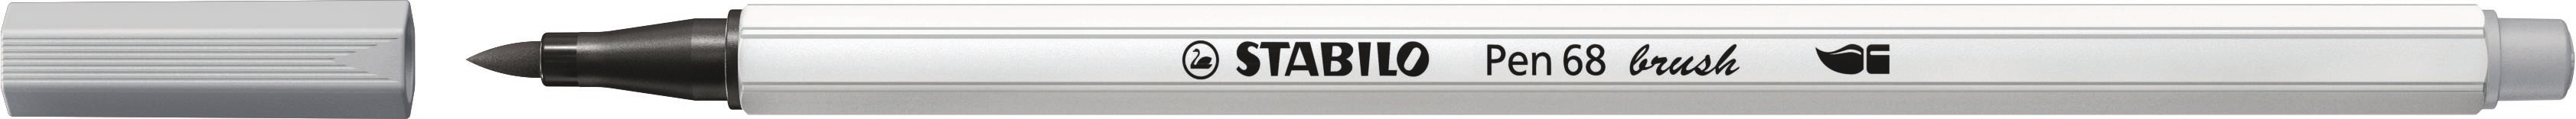 STABILO Stylo Fibre 68 brush 568/95 gris clair gris clair